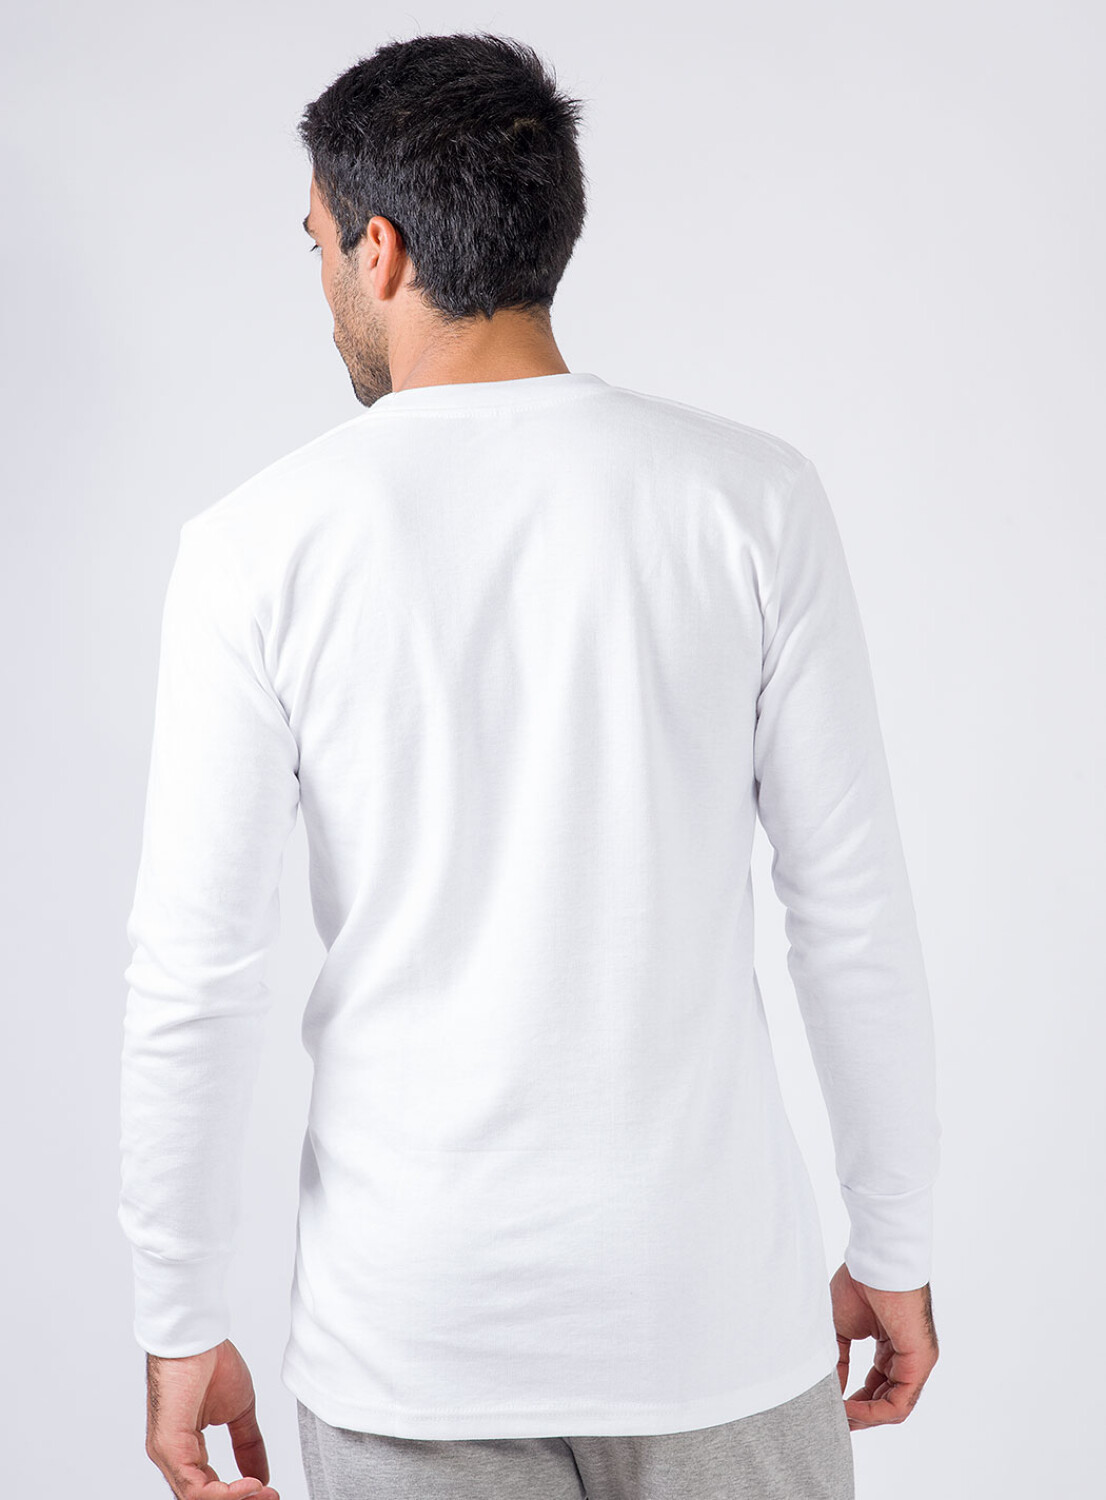 Camiseta manga larga Interlock hombre